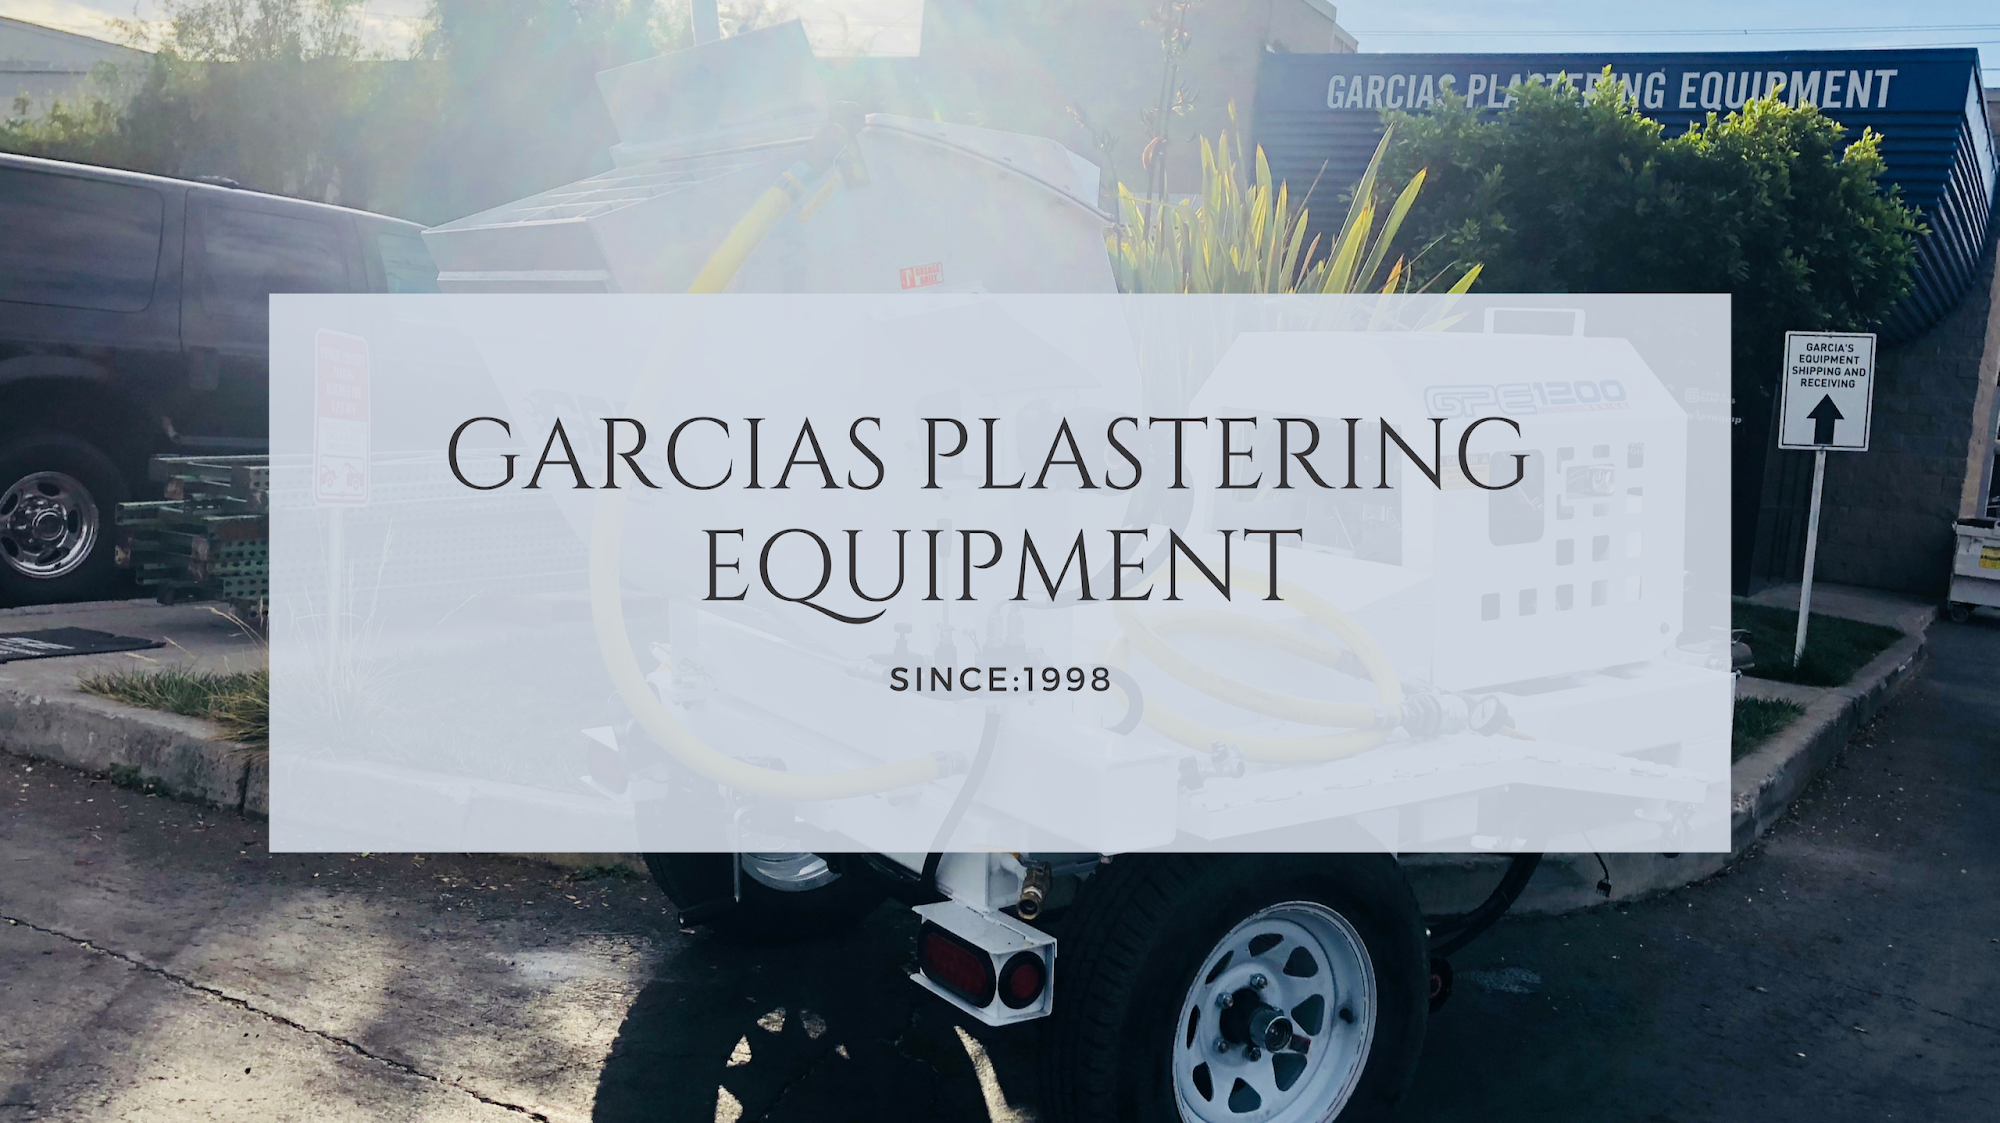 Garcia's Plastering Equipment